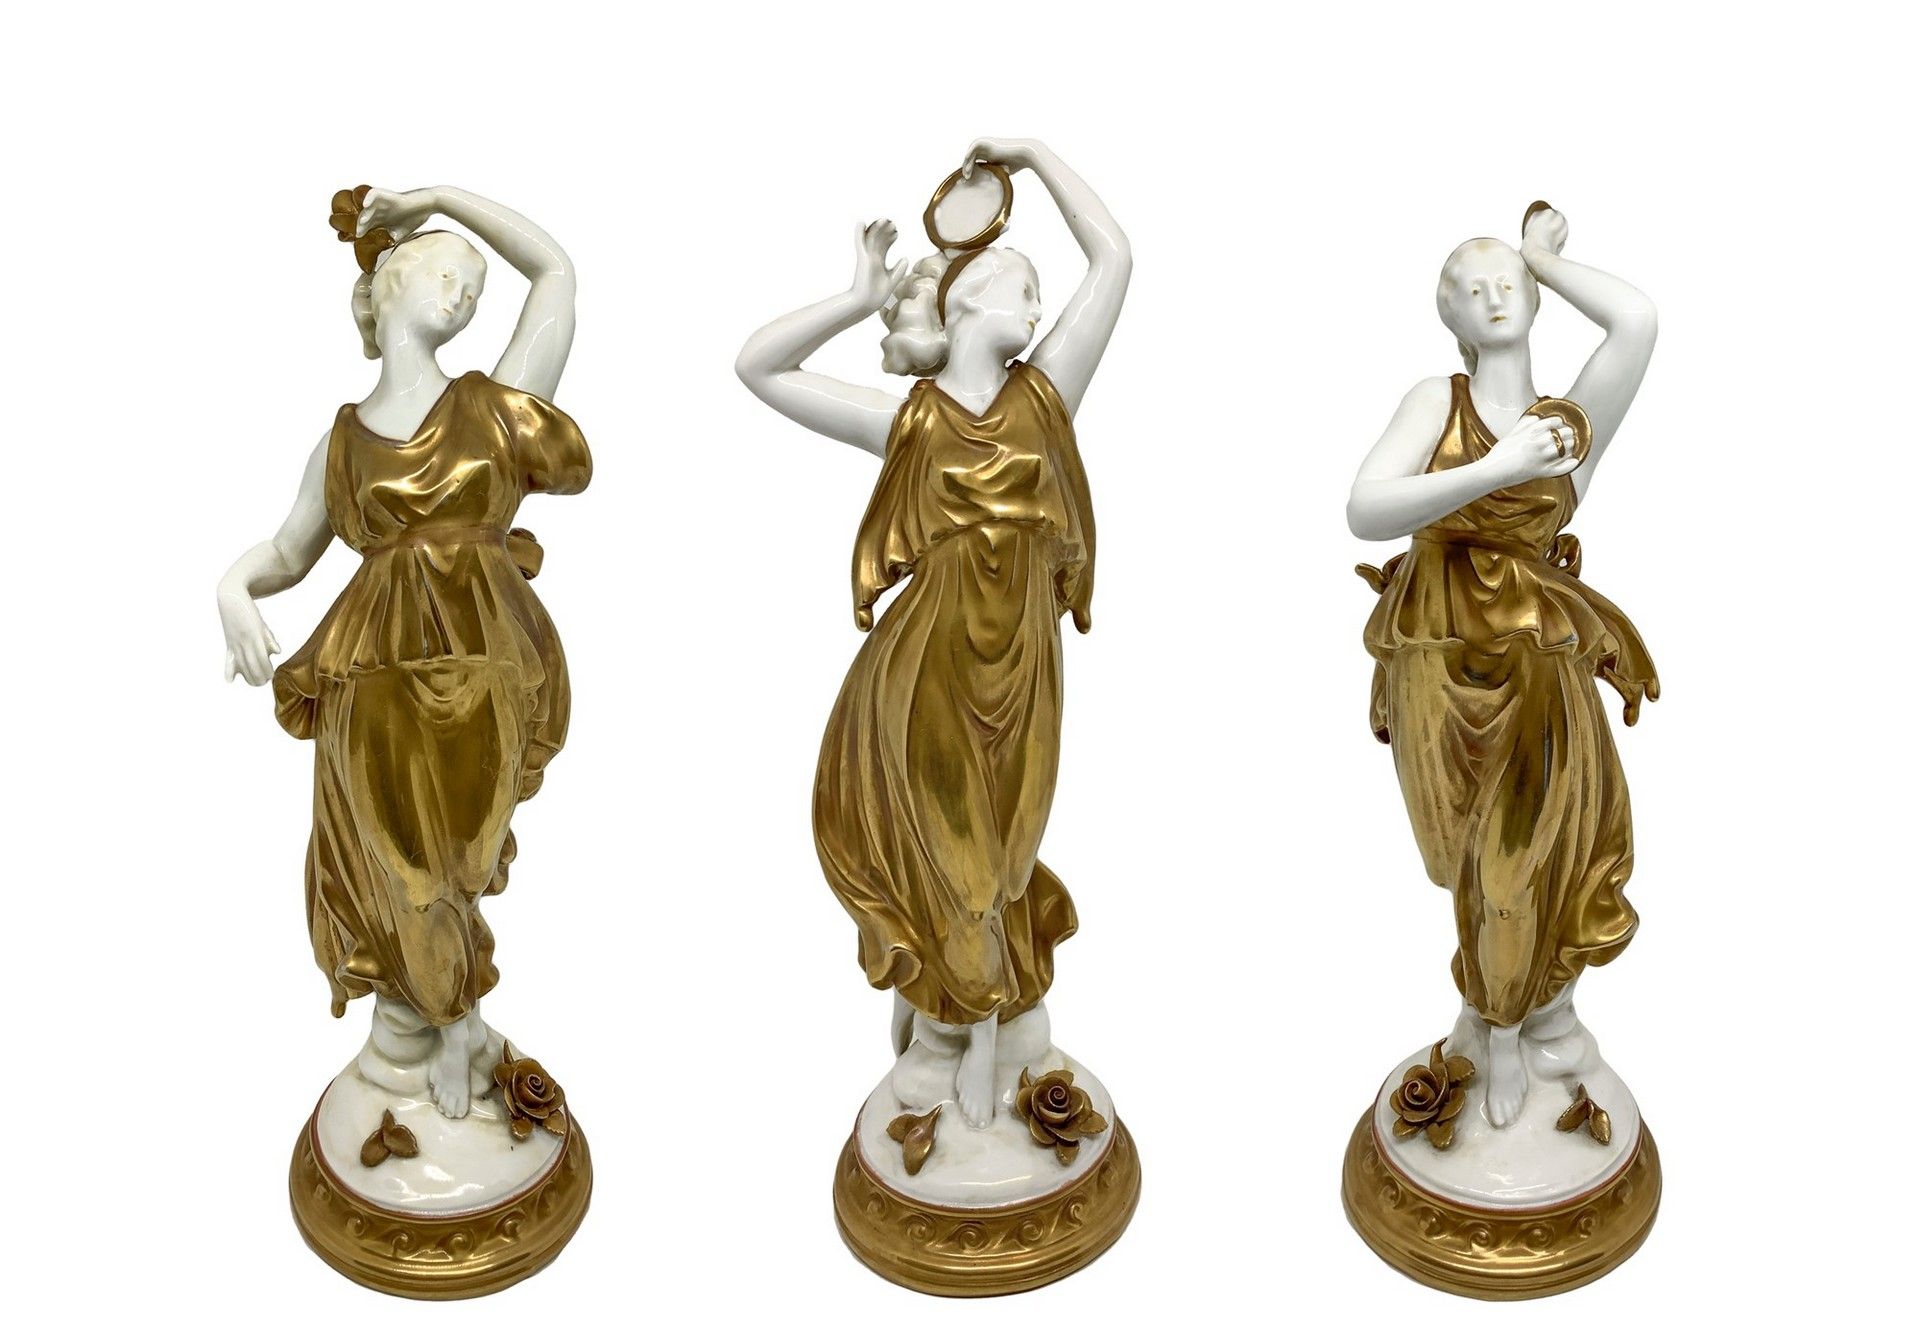 CAPODIMONTE N.3 白色和镀金的瓷器雕像，描绘了跳舞的女人，高28厘米，大约 小的缺点。